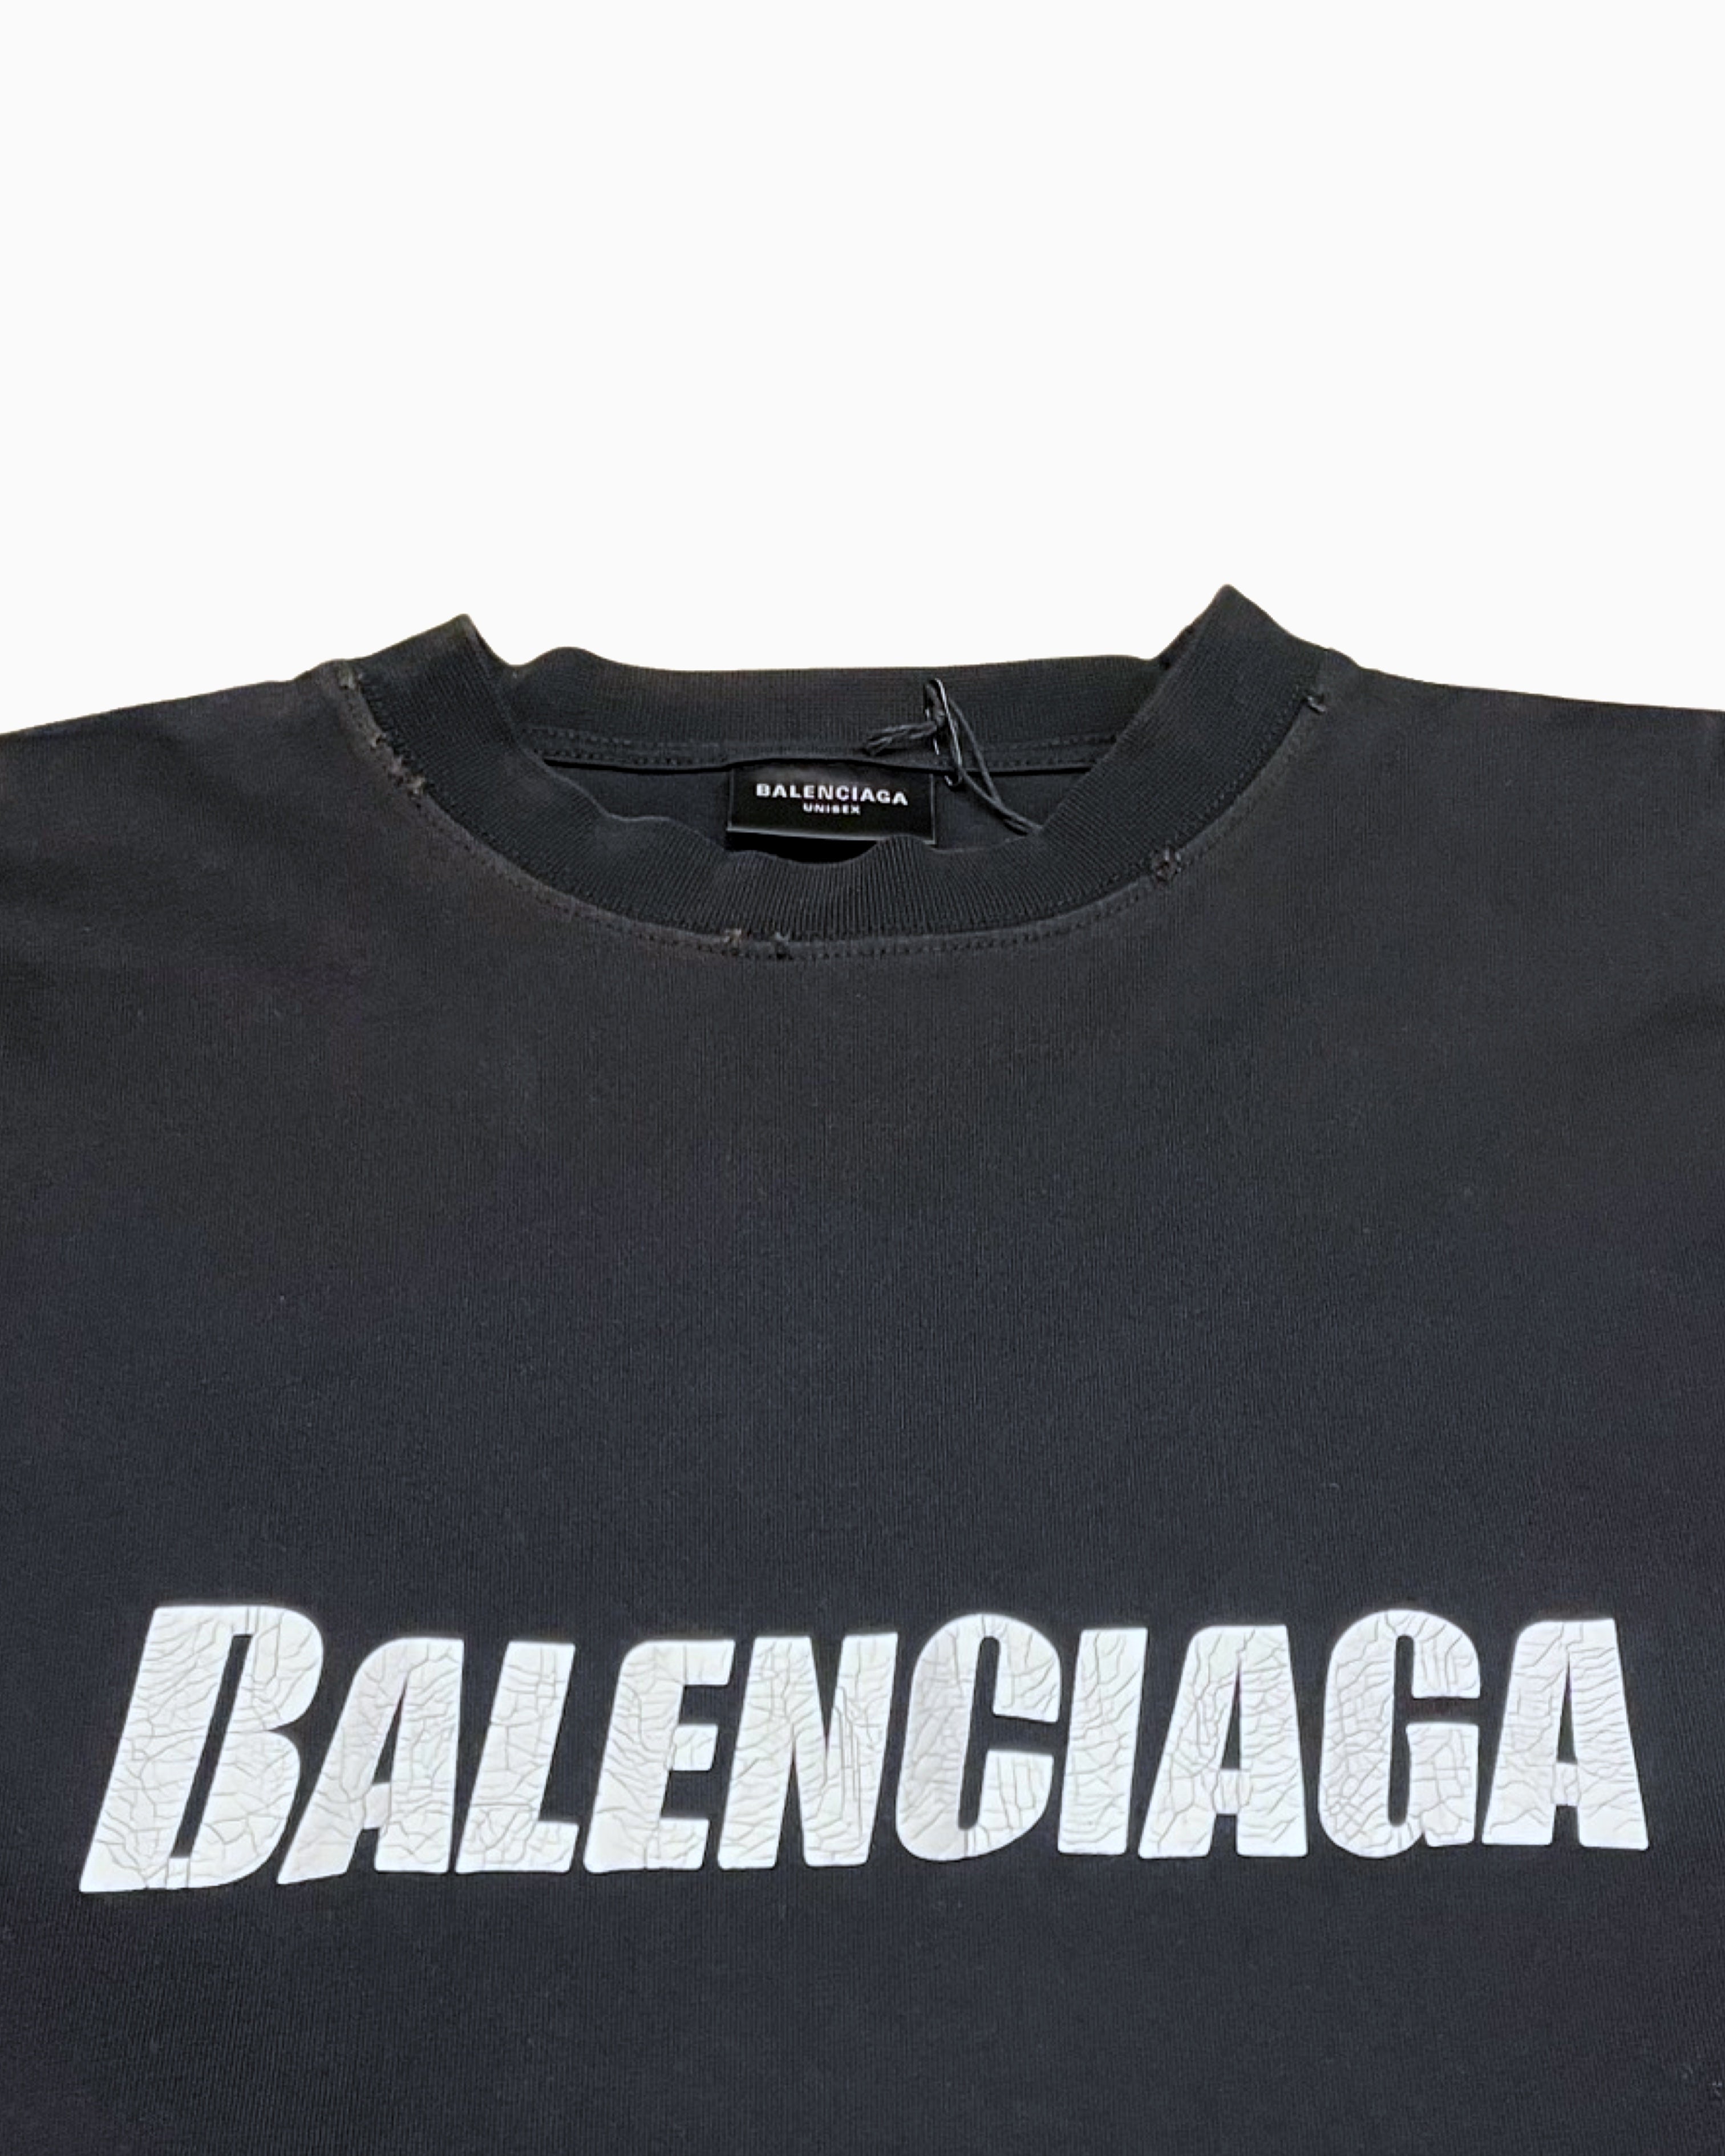 Balenciaga Distressed Oversized T-Shirt